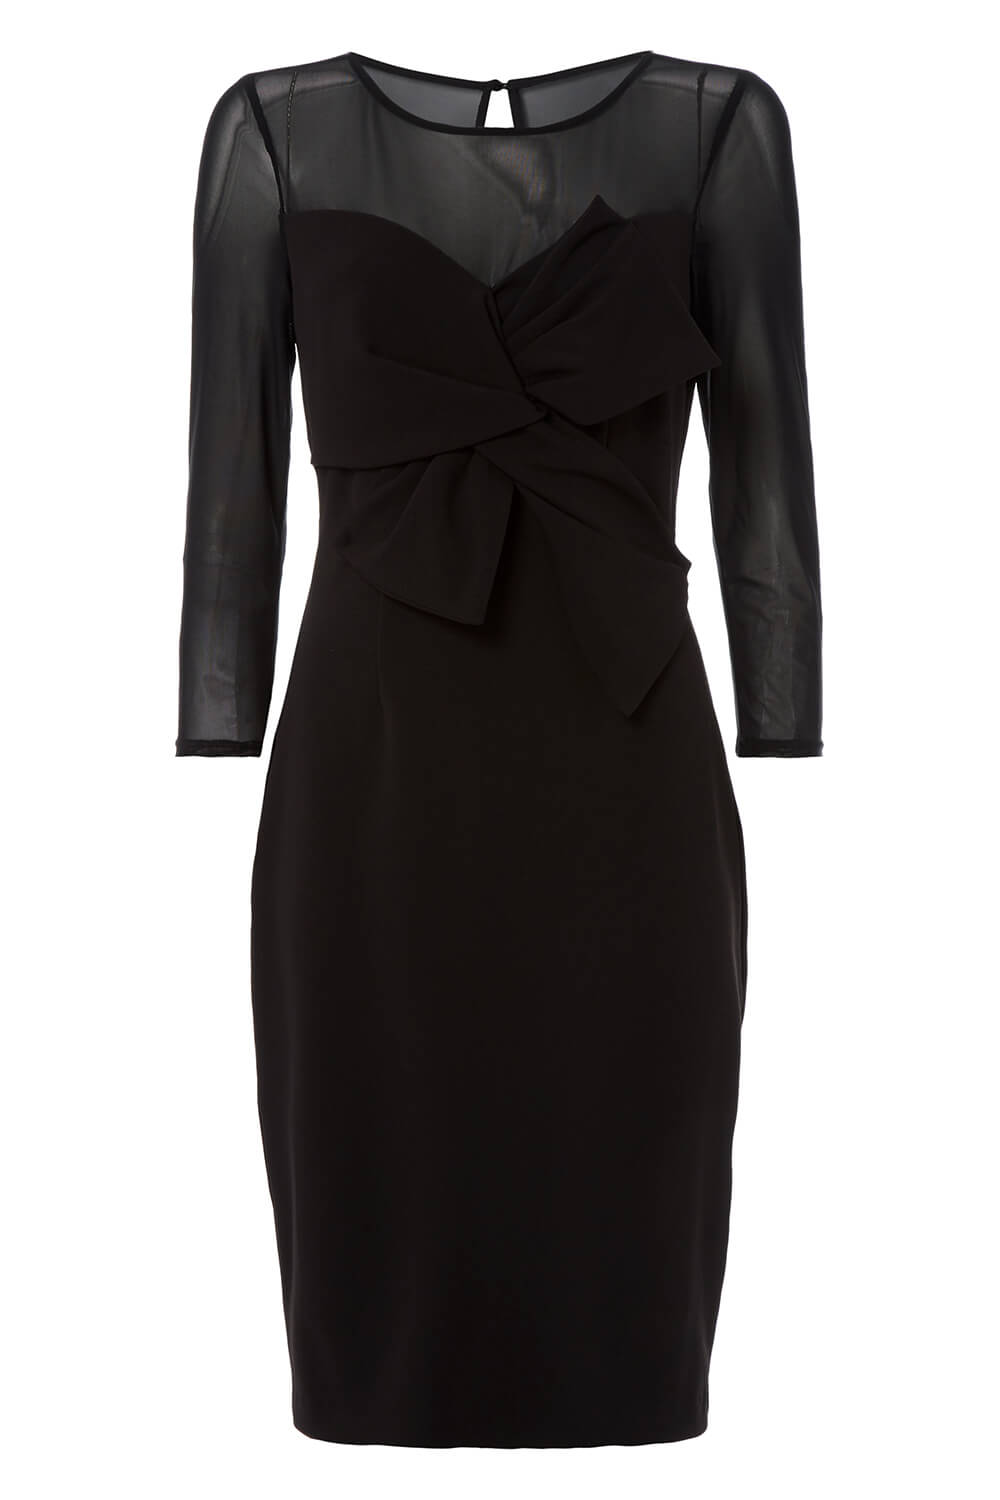 Black Bow Detail Dress, Image 4 of 4